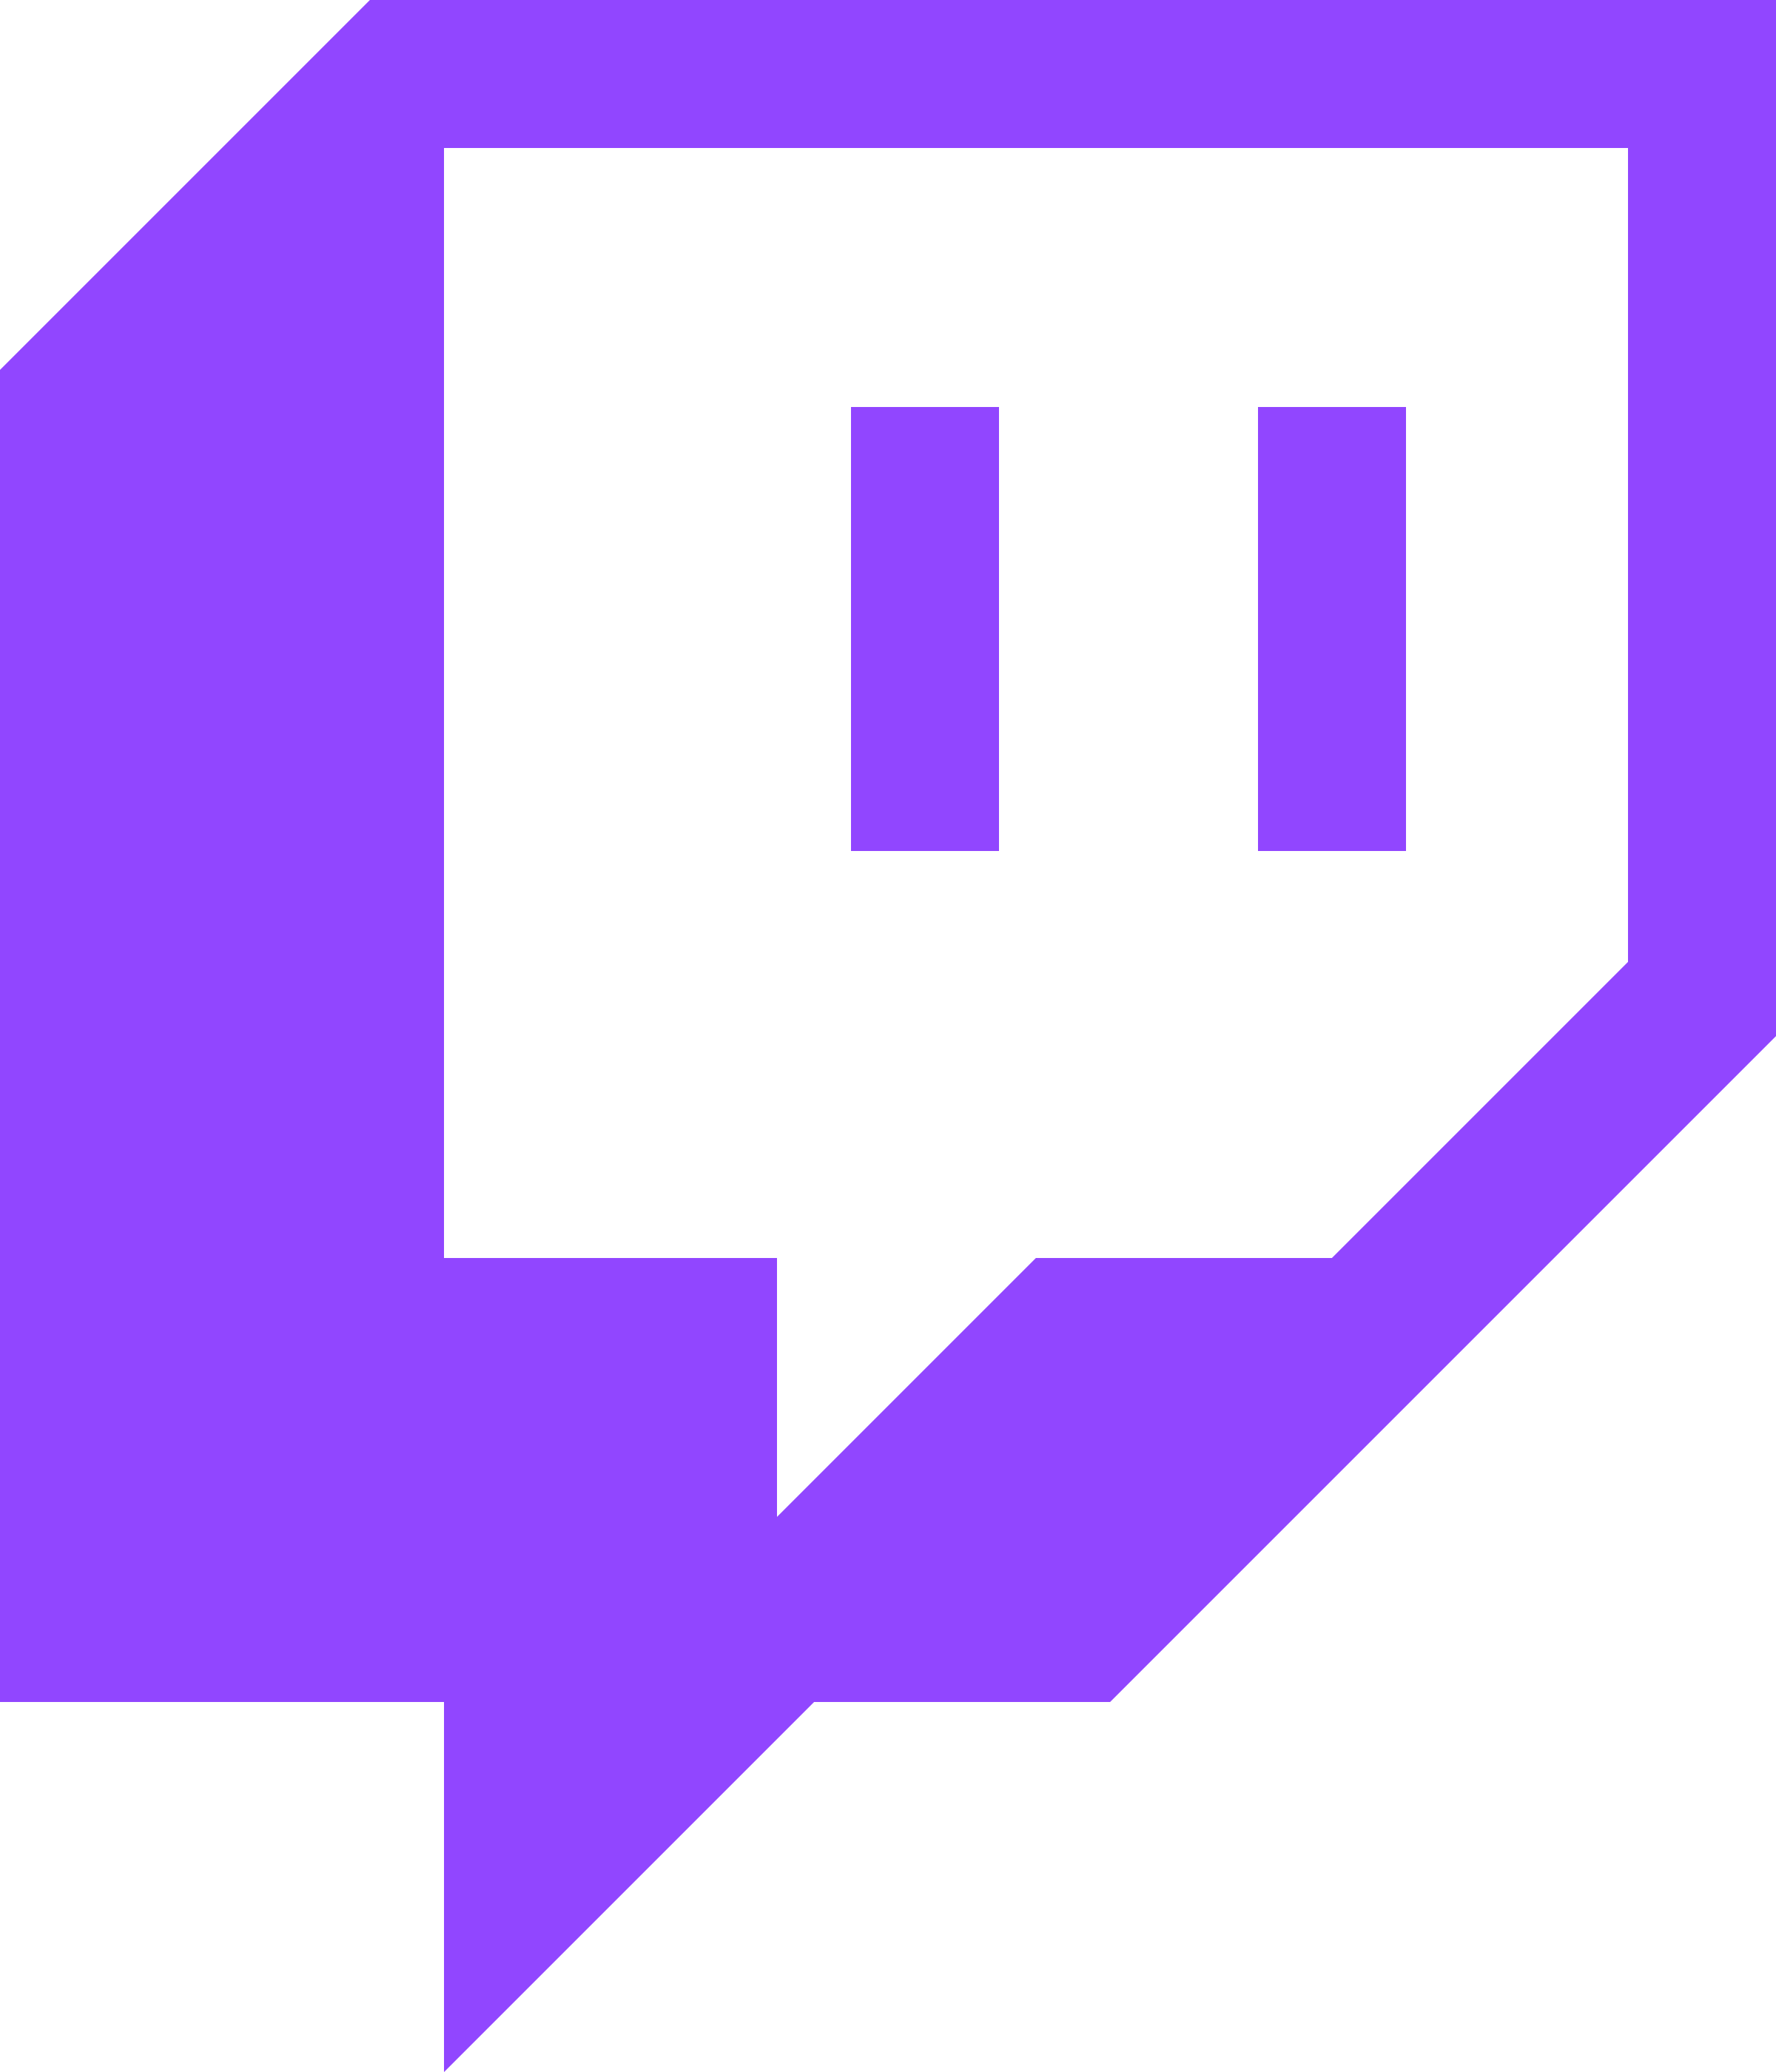 Twitch's icon